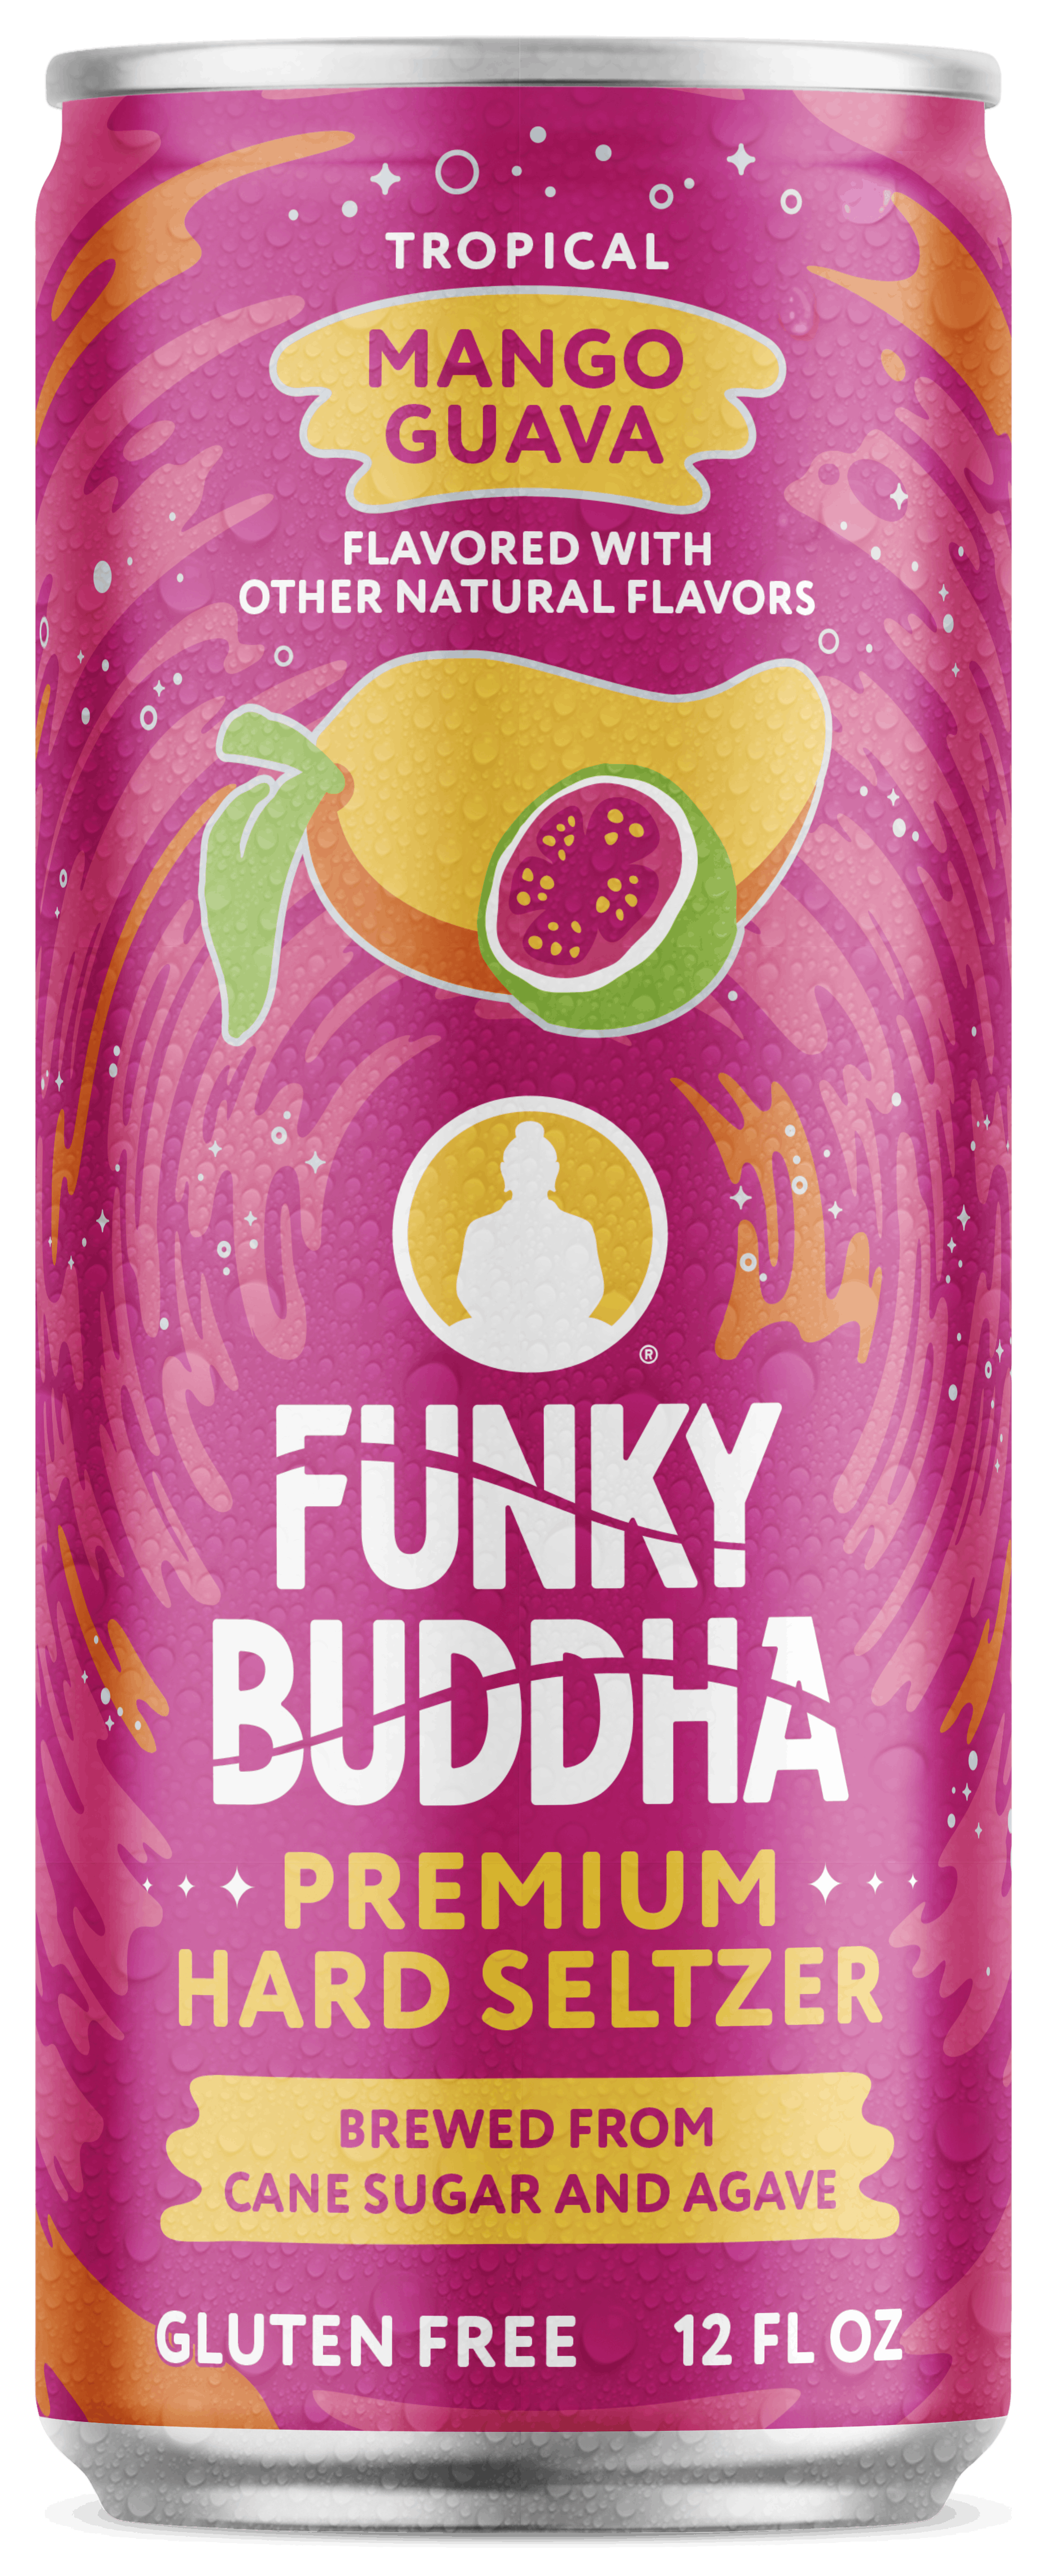 Funky Buddha Seltzer - Mango Guava